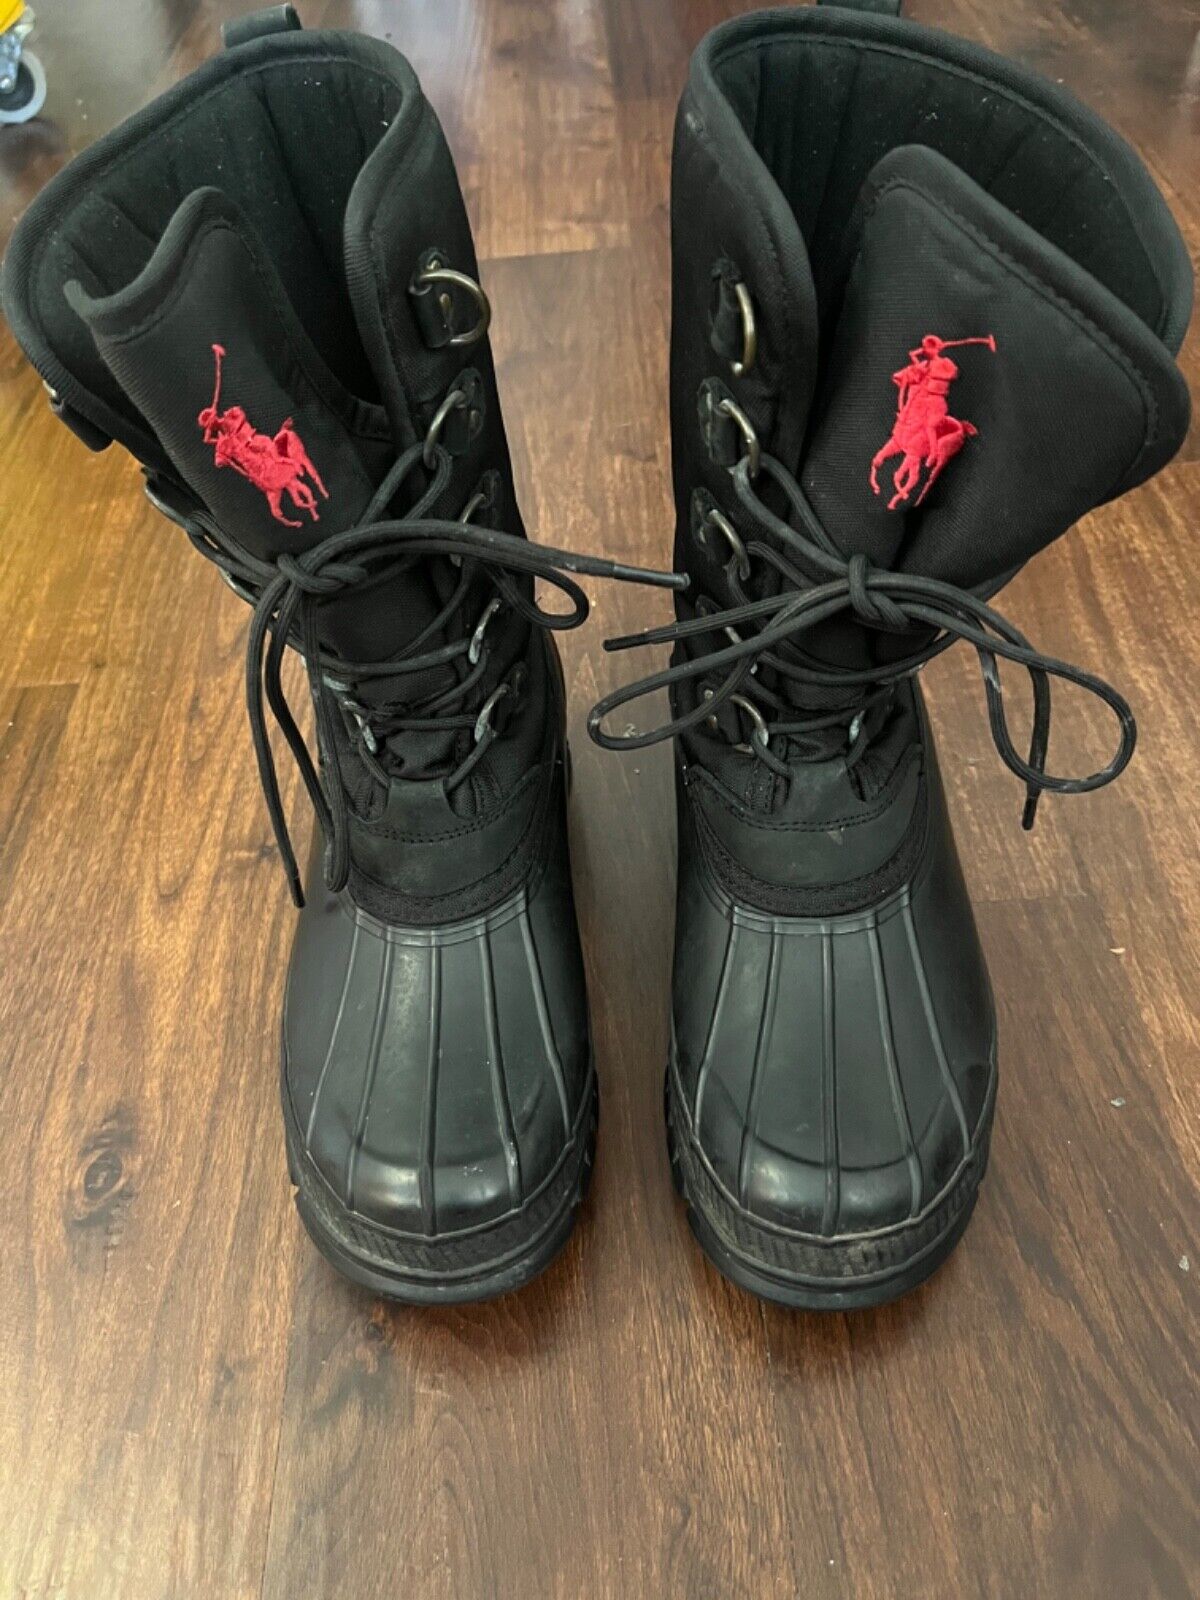 Ralph Lauren Polo Nylon Snow & Rain Boots Rare Size 10 Used